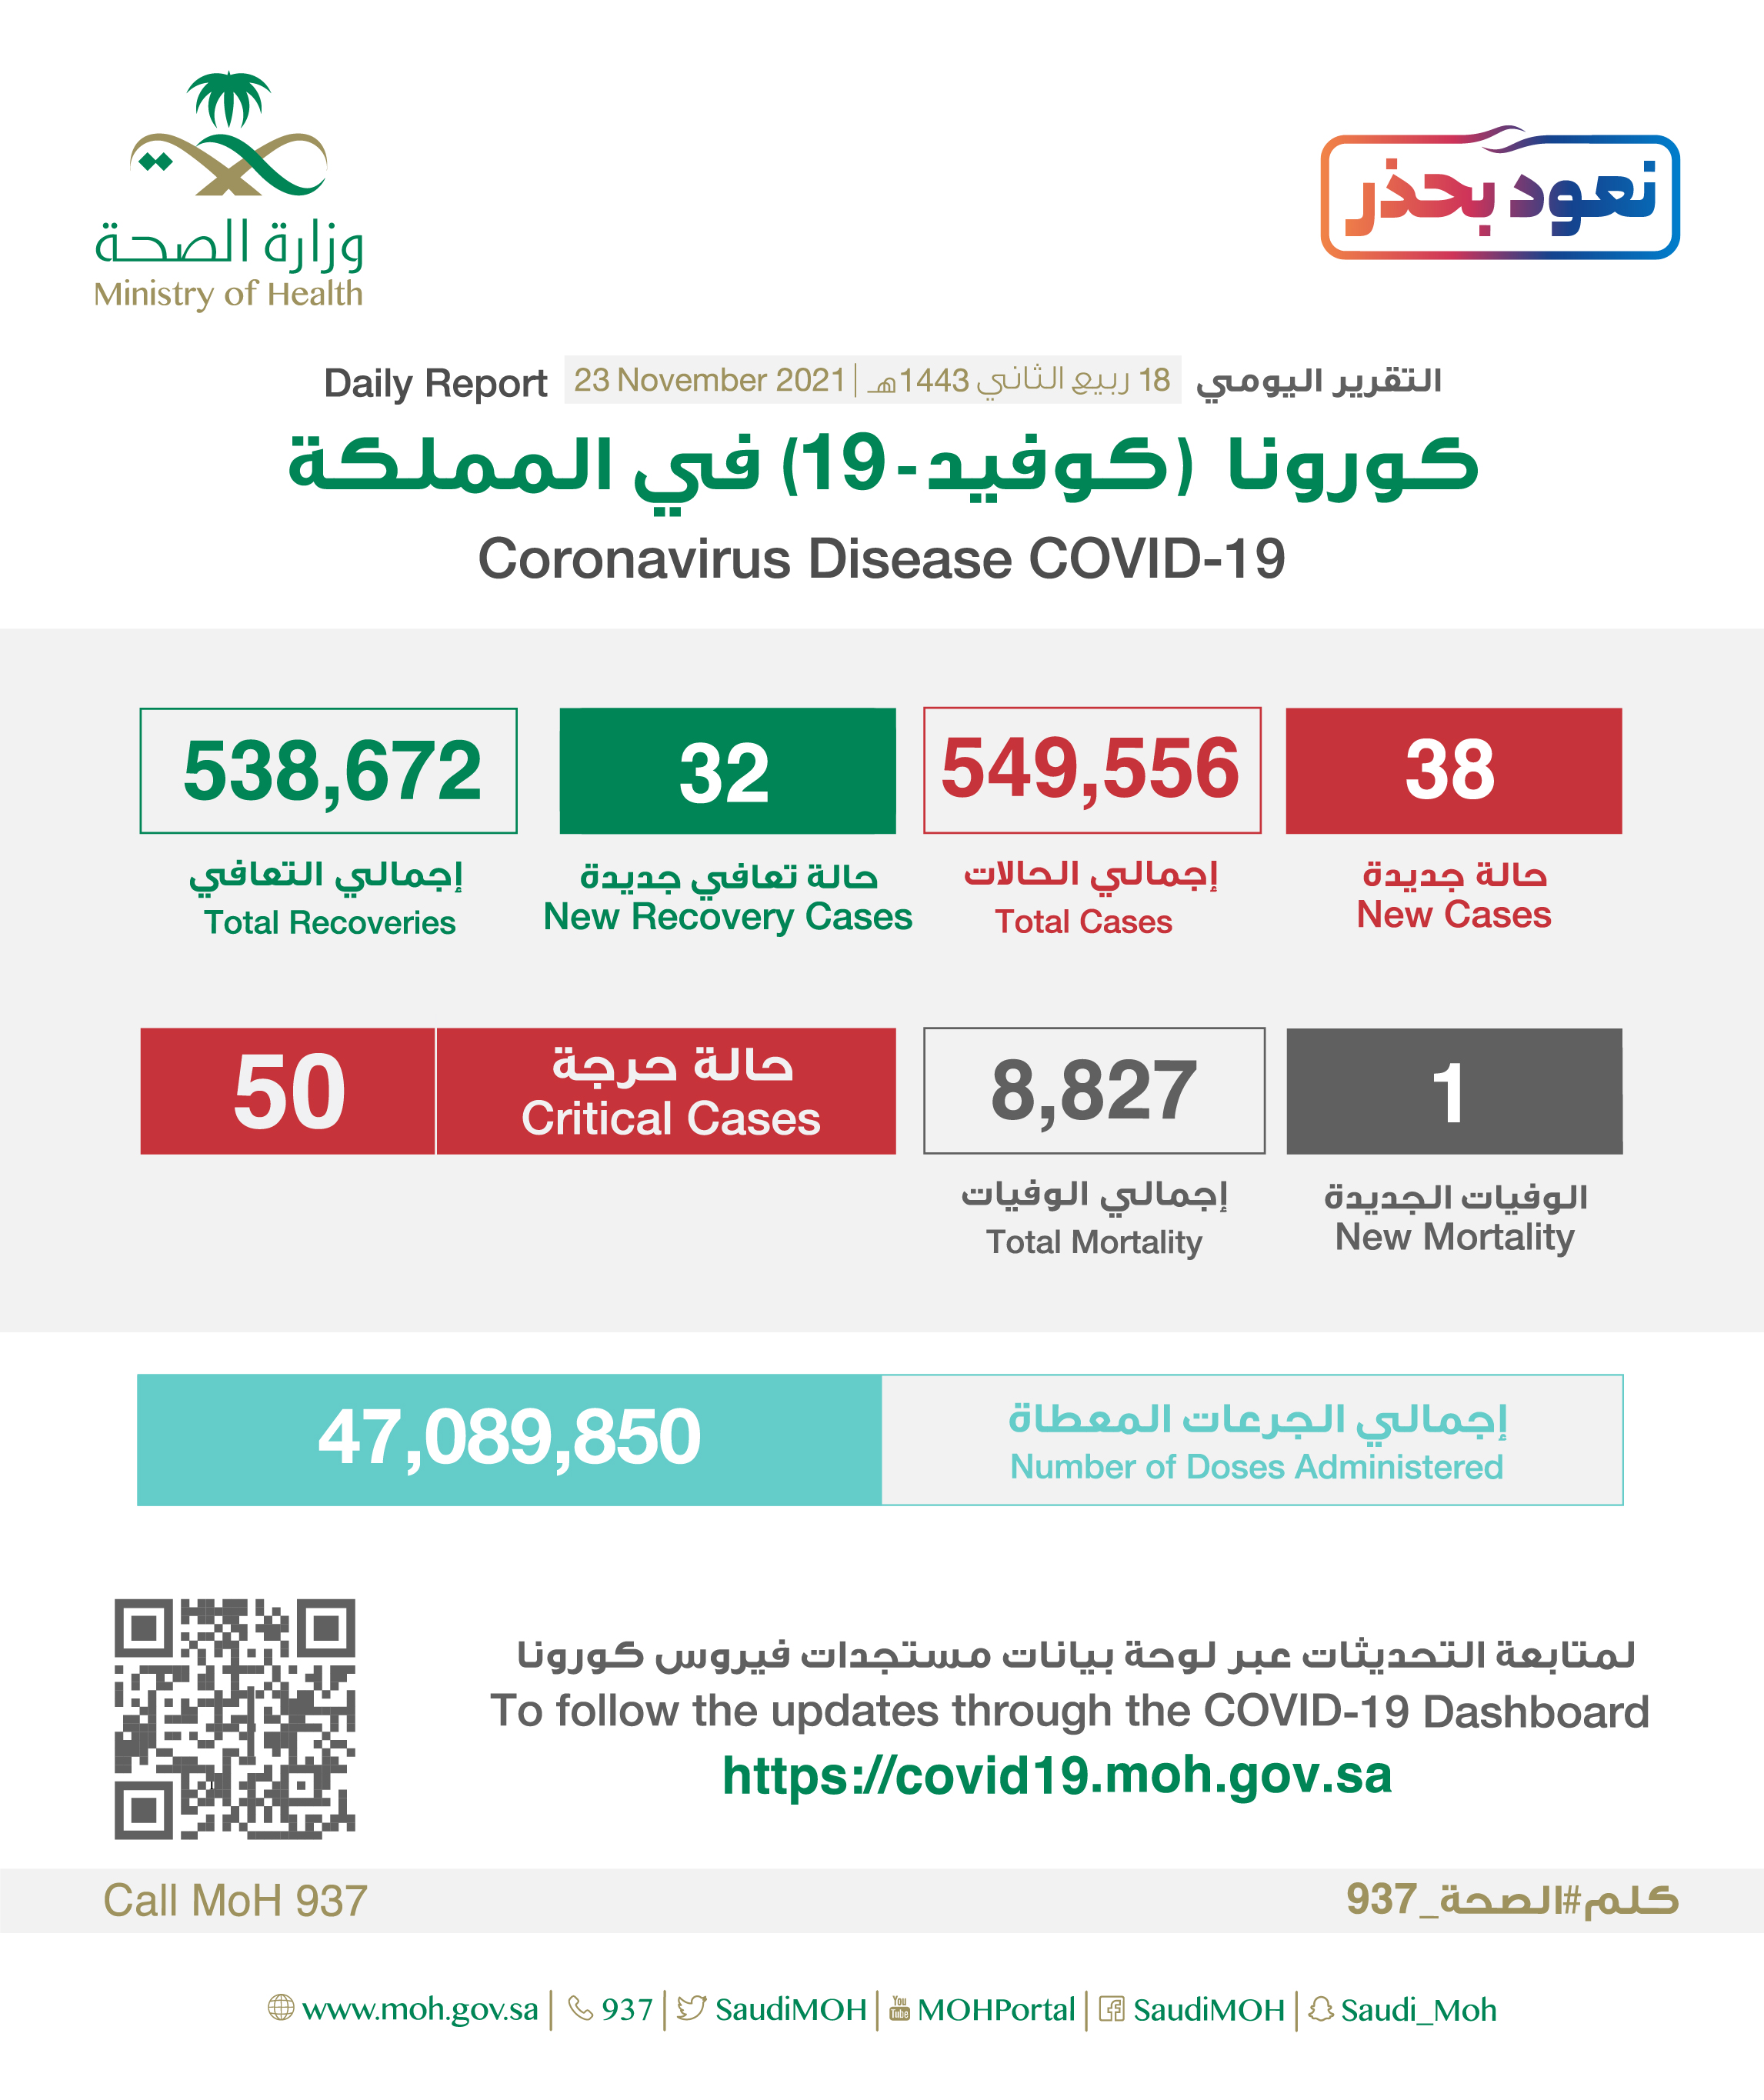 Saudi Arabia Coronavirus : Total Cases : 549,556 , New Cases : 38, Cured : 538,672, Deaths: 8,827, Active Cases : 2057